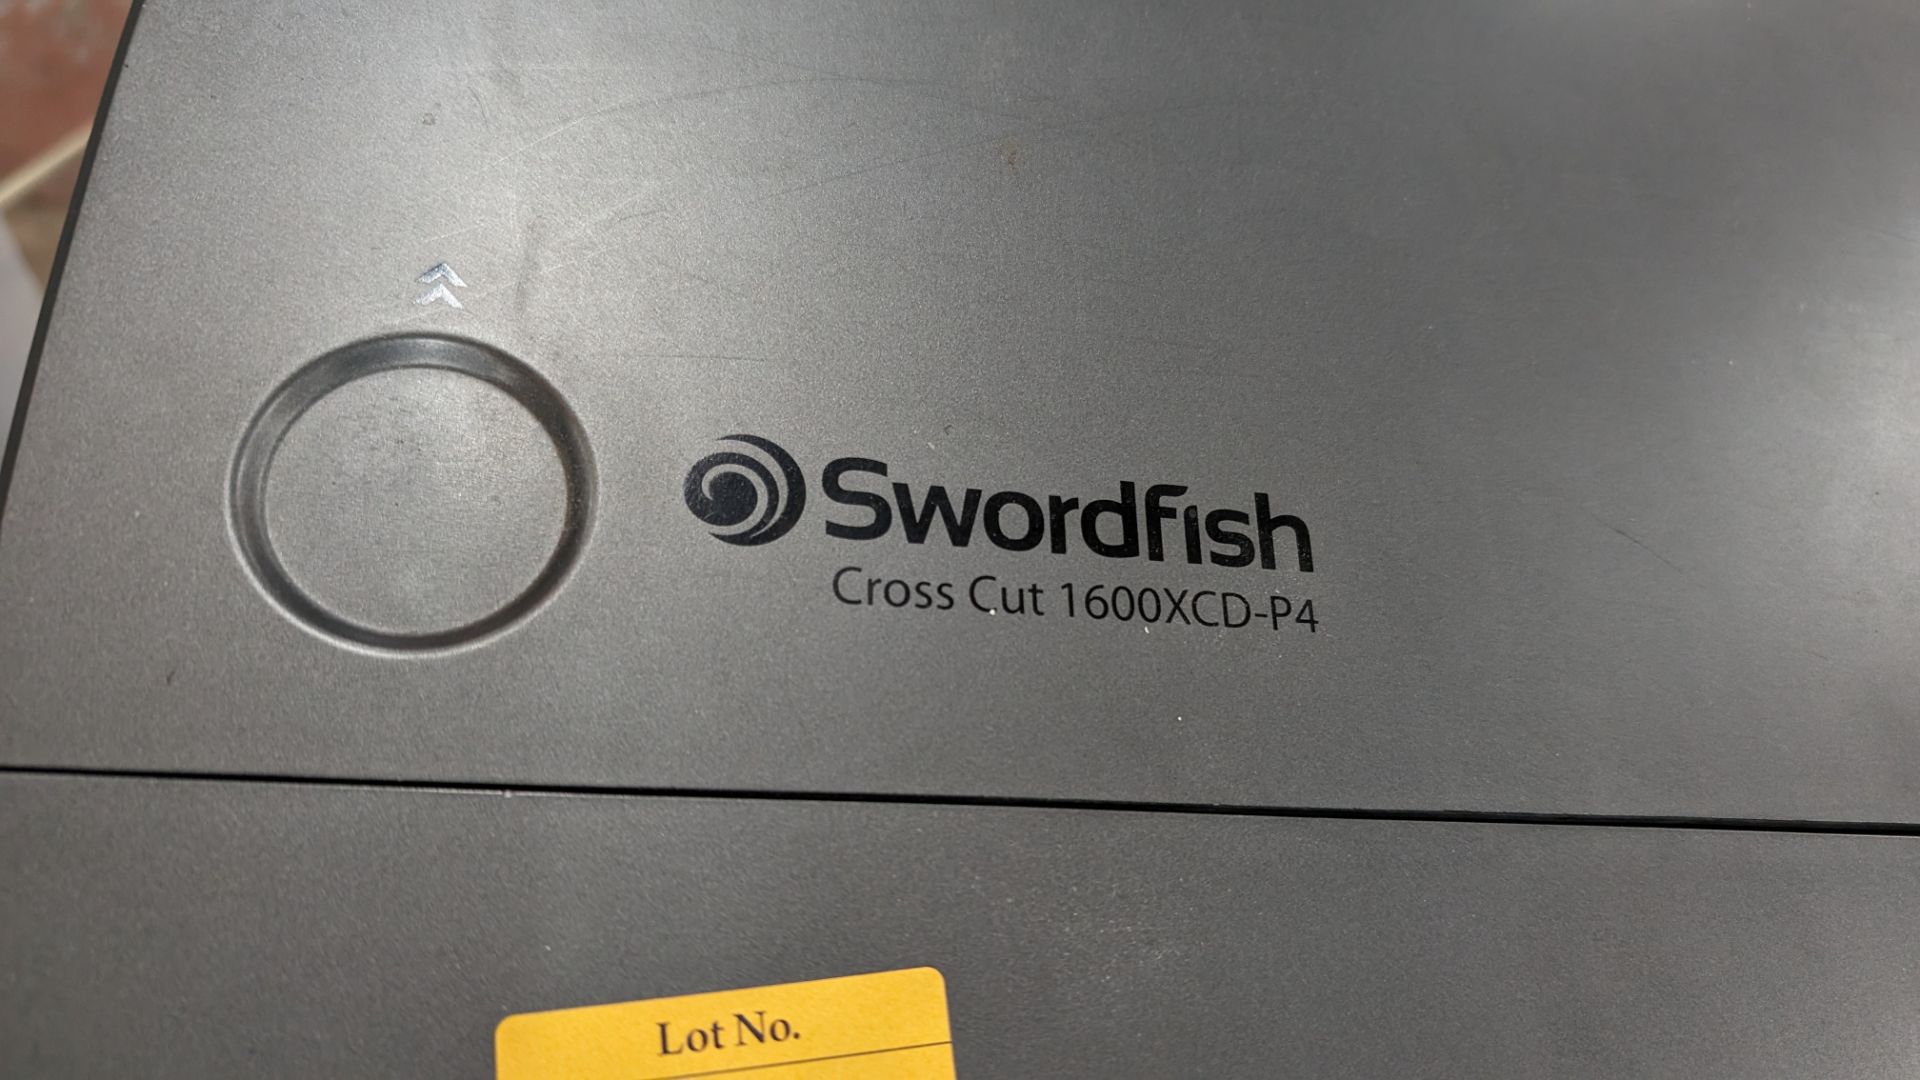 Swordfish cross cut shredder model 1600XCD-P4 & Crenova A4 laminator - Image 9 of 10